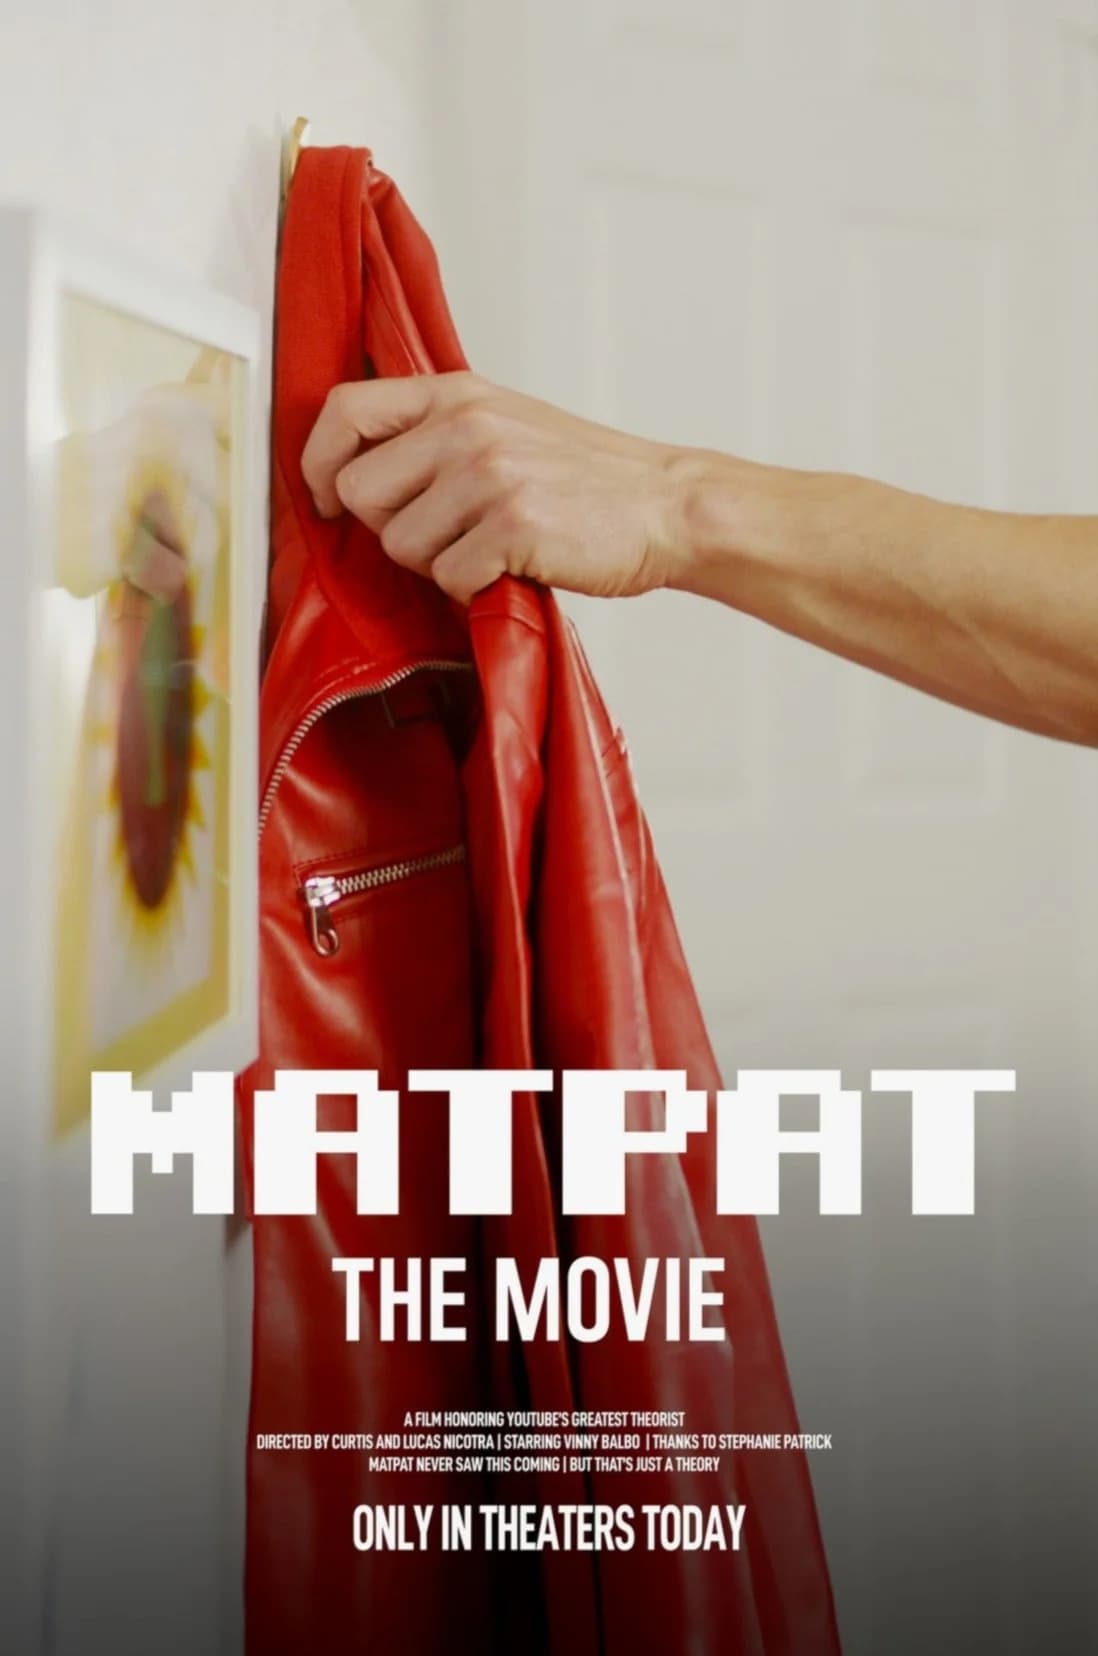 MatPat: The Movie